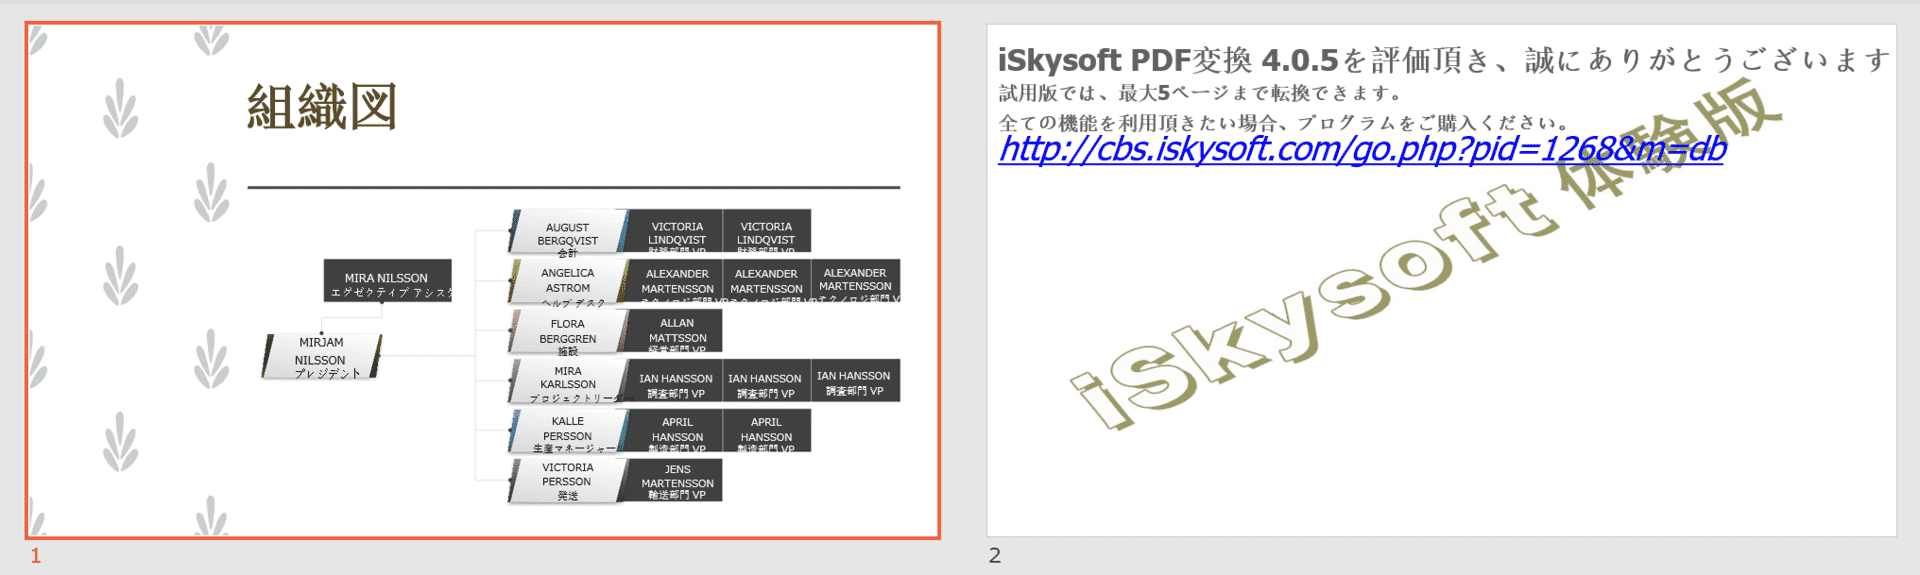 iSkysoft PDF変換